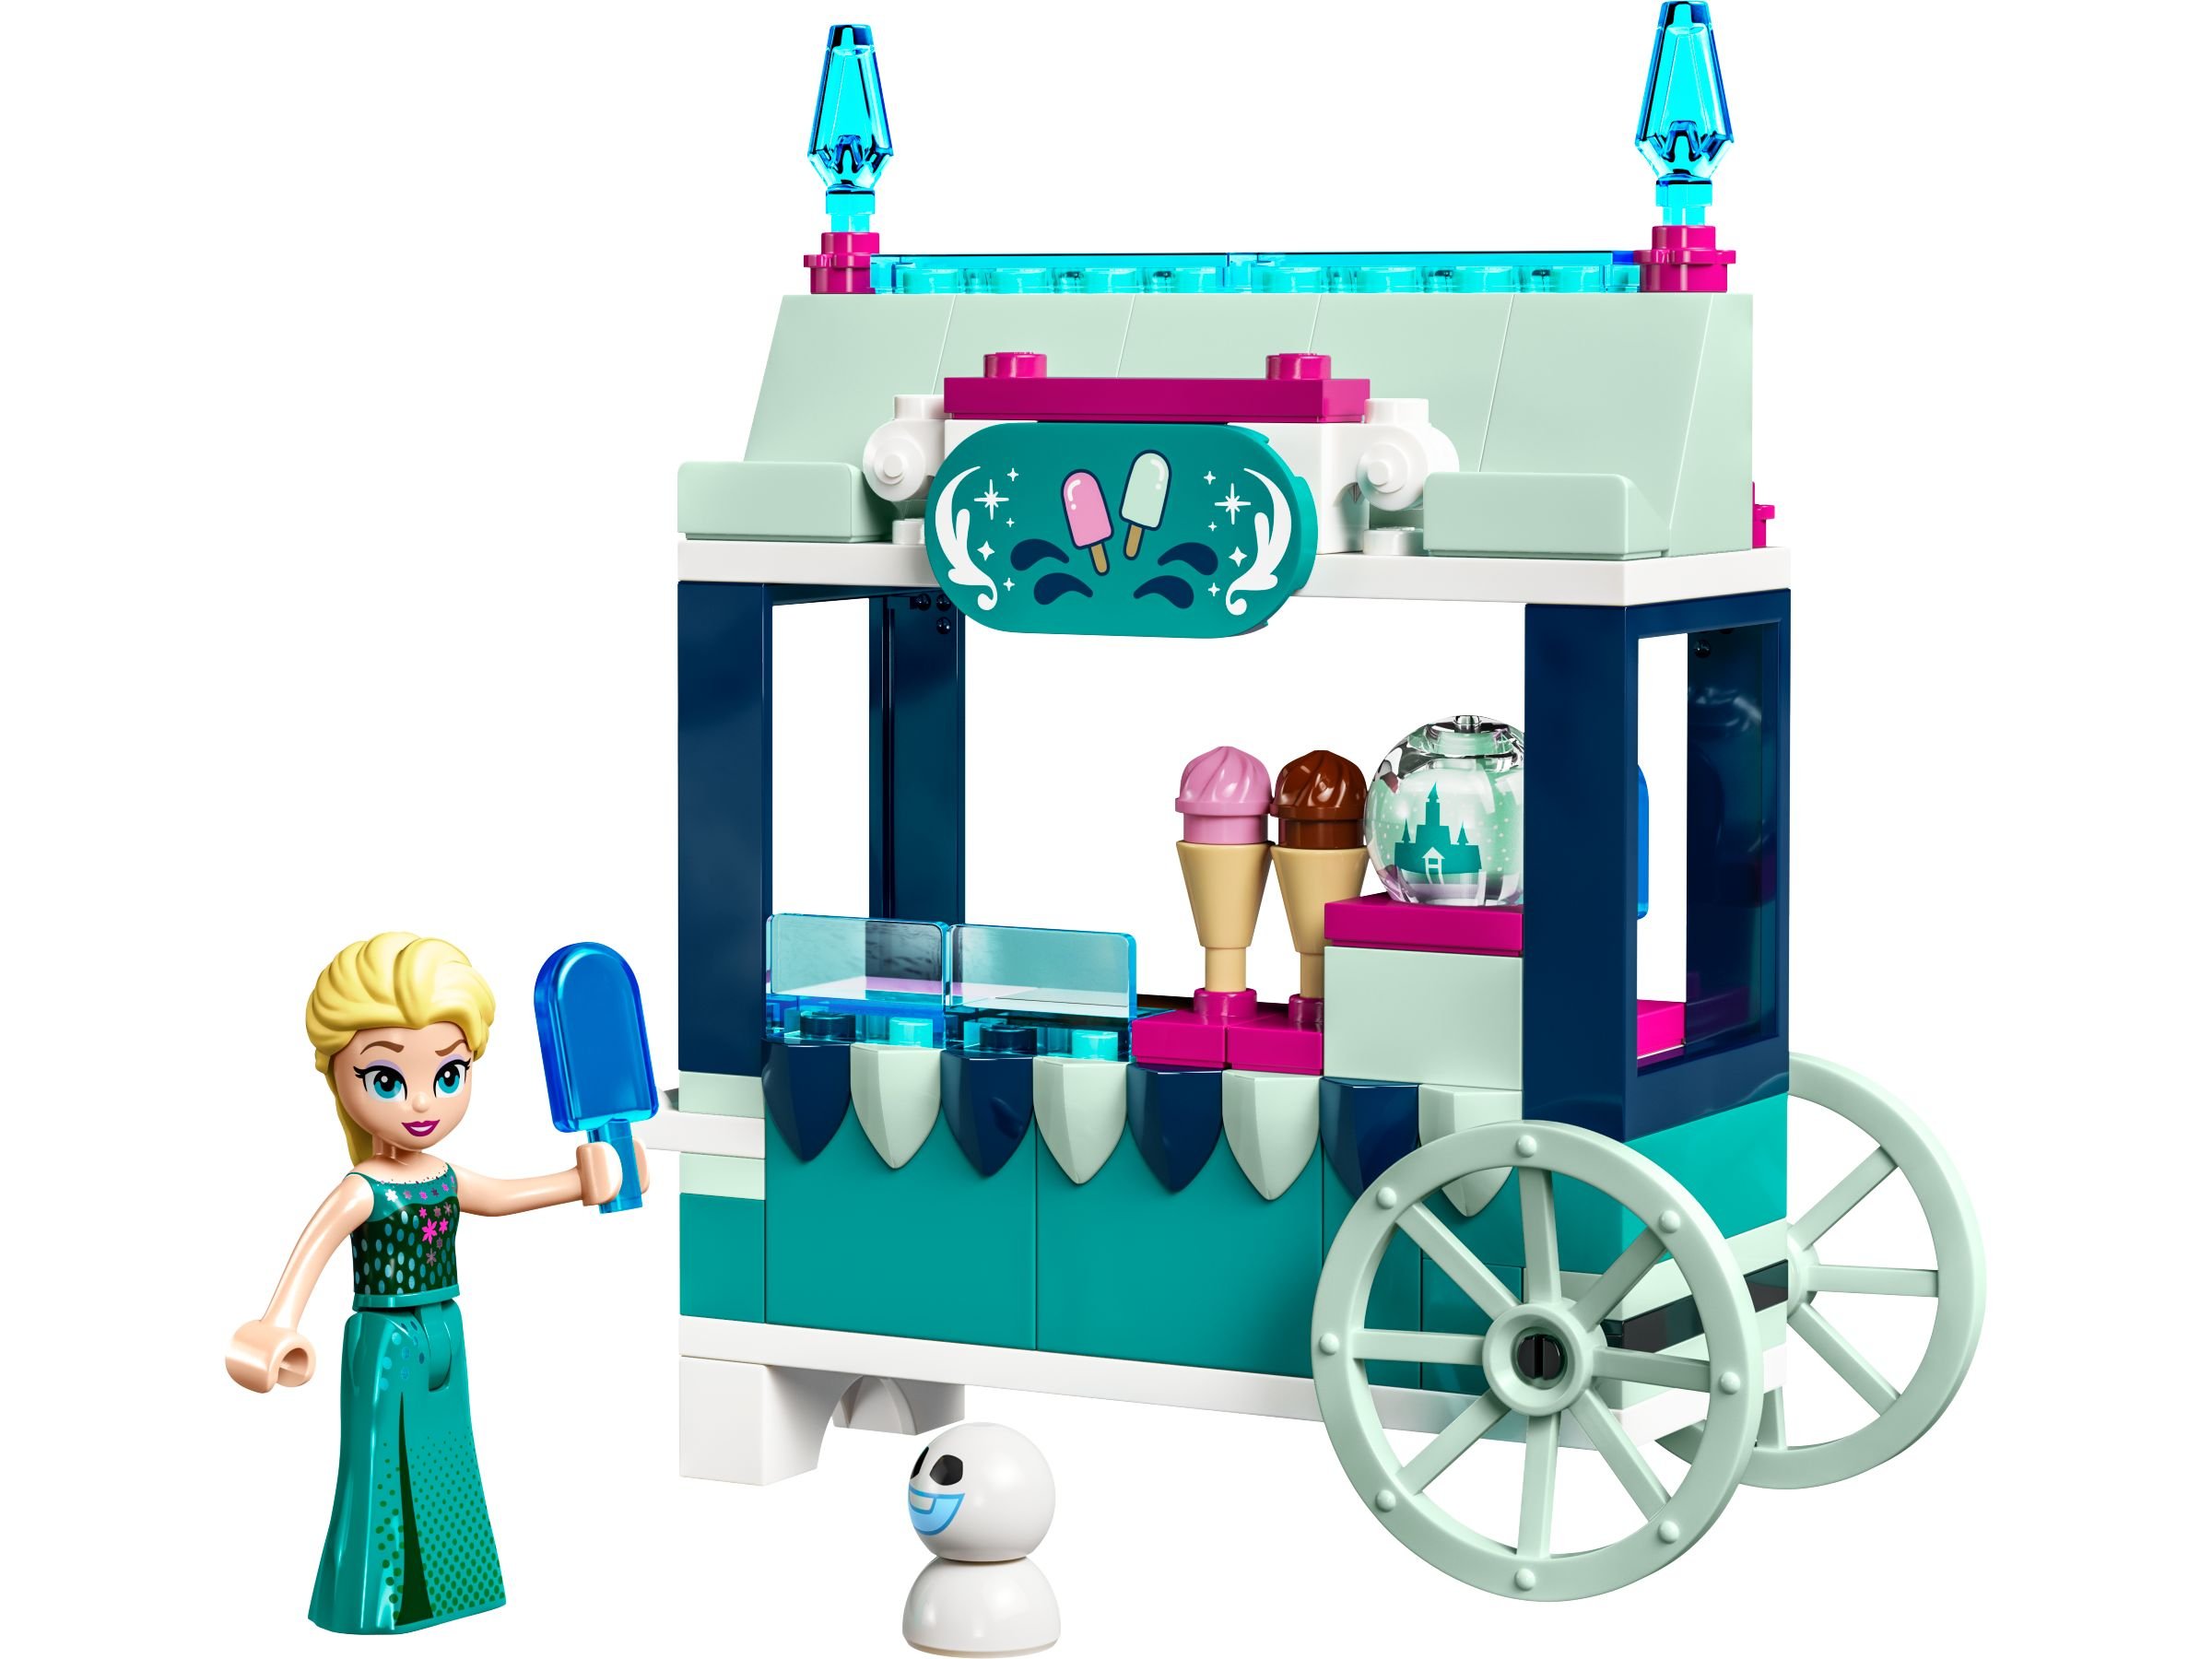 LEGO Disney 43234 Elsas Eisstand